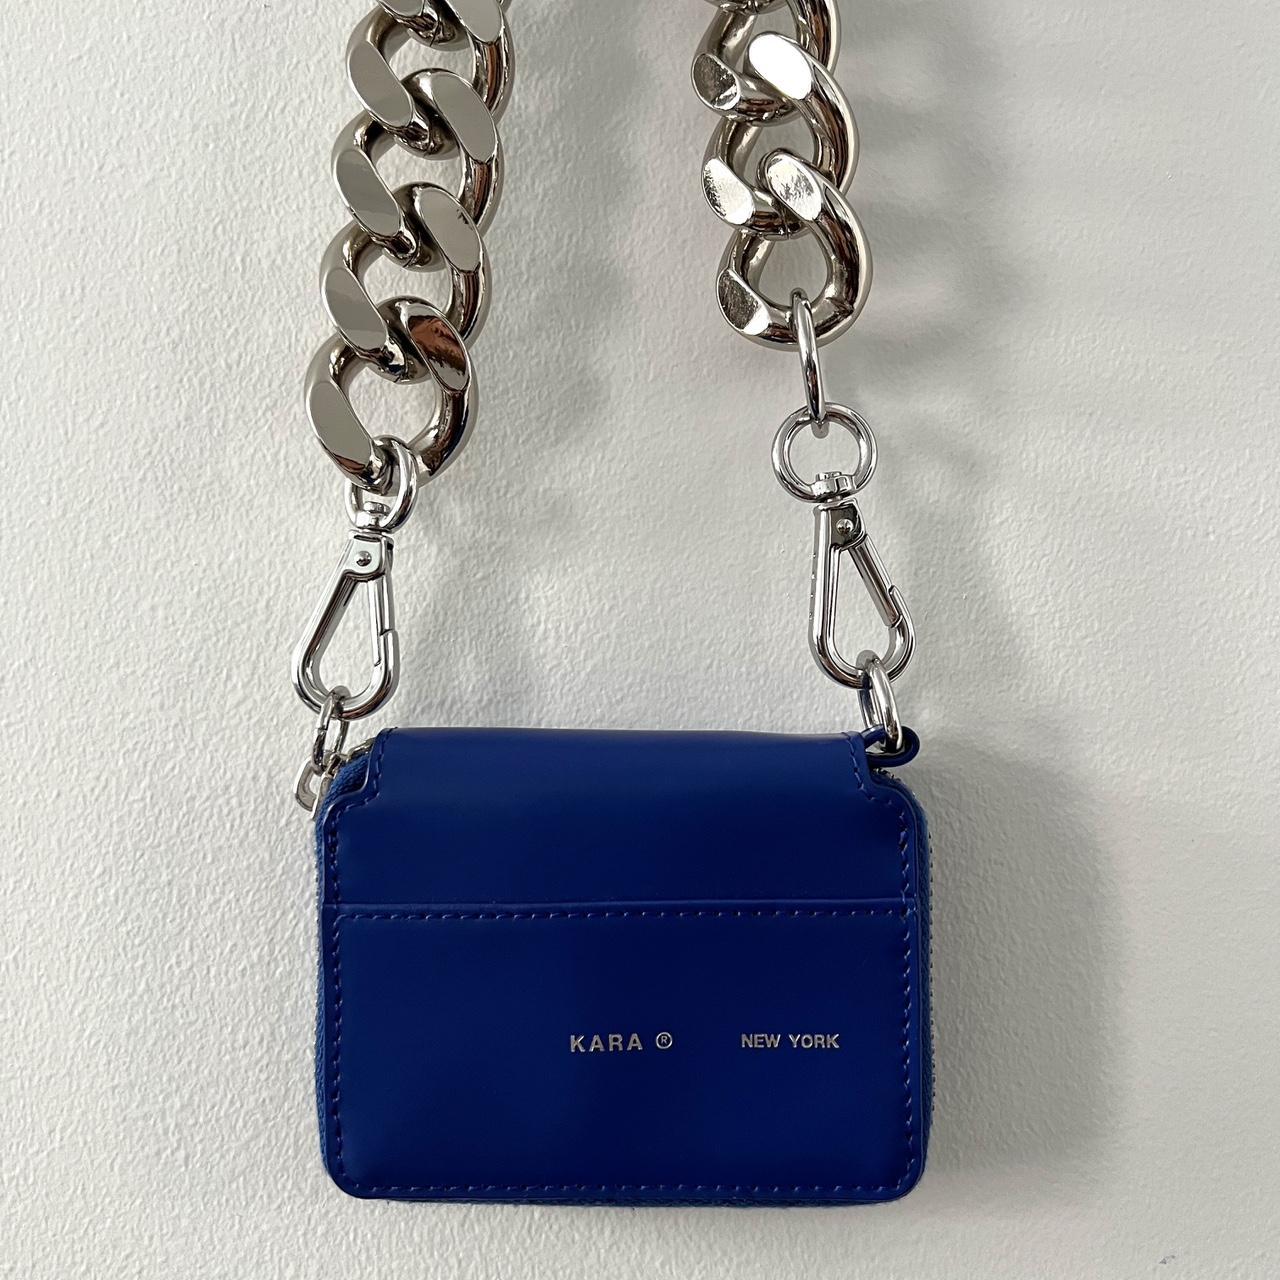 Kara Women's Blue and Silver Bag (2)